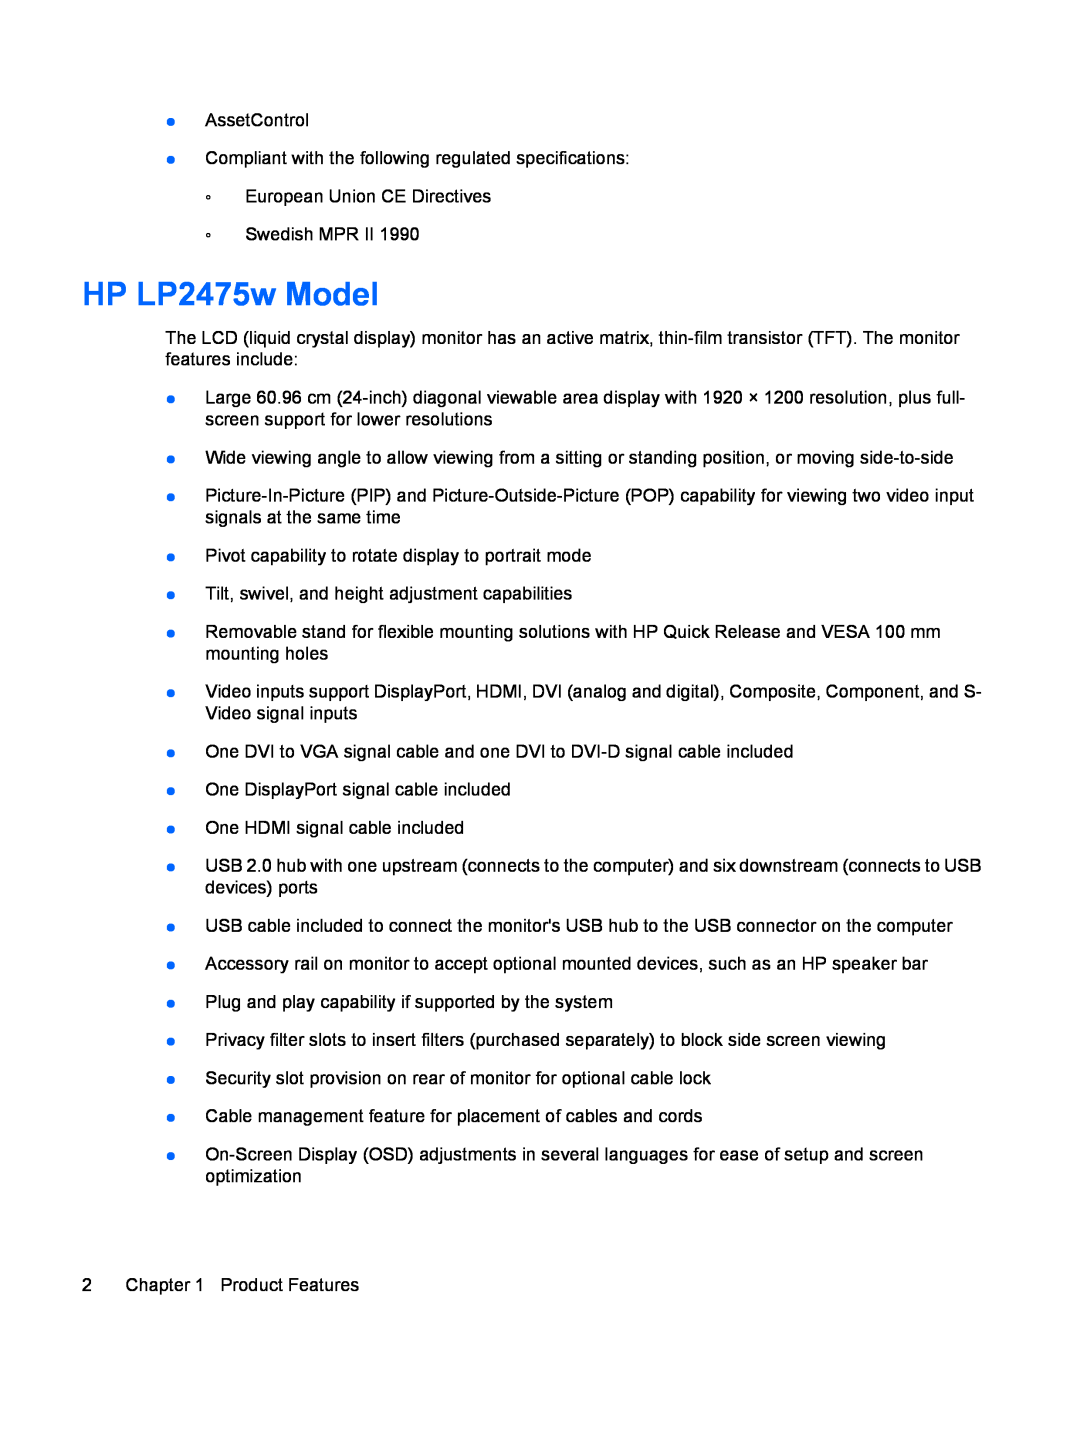 HP LP2275w manual HP LP2475w Model 